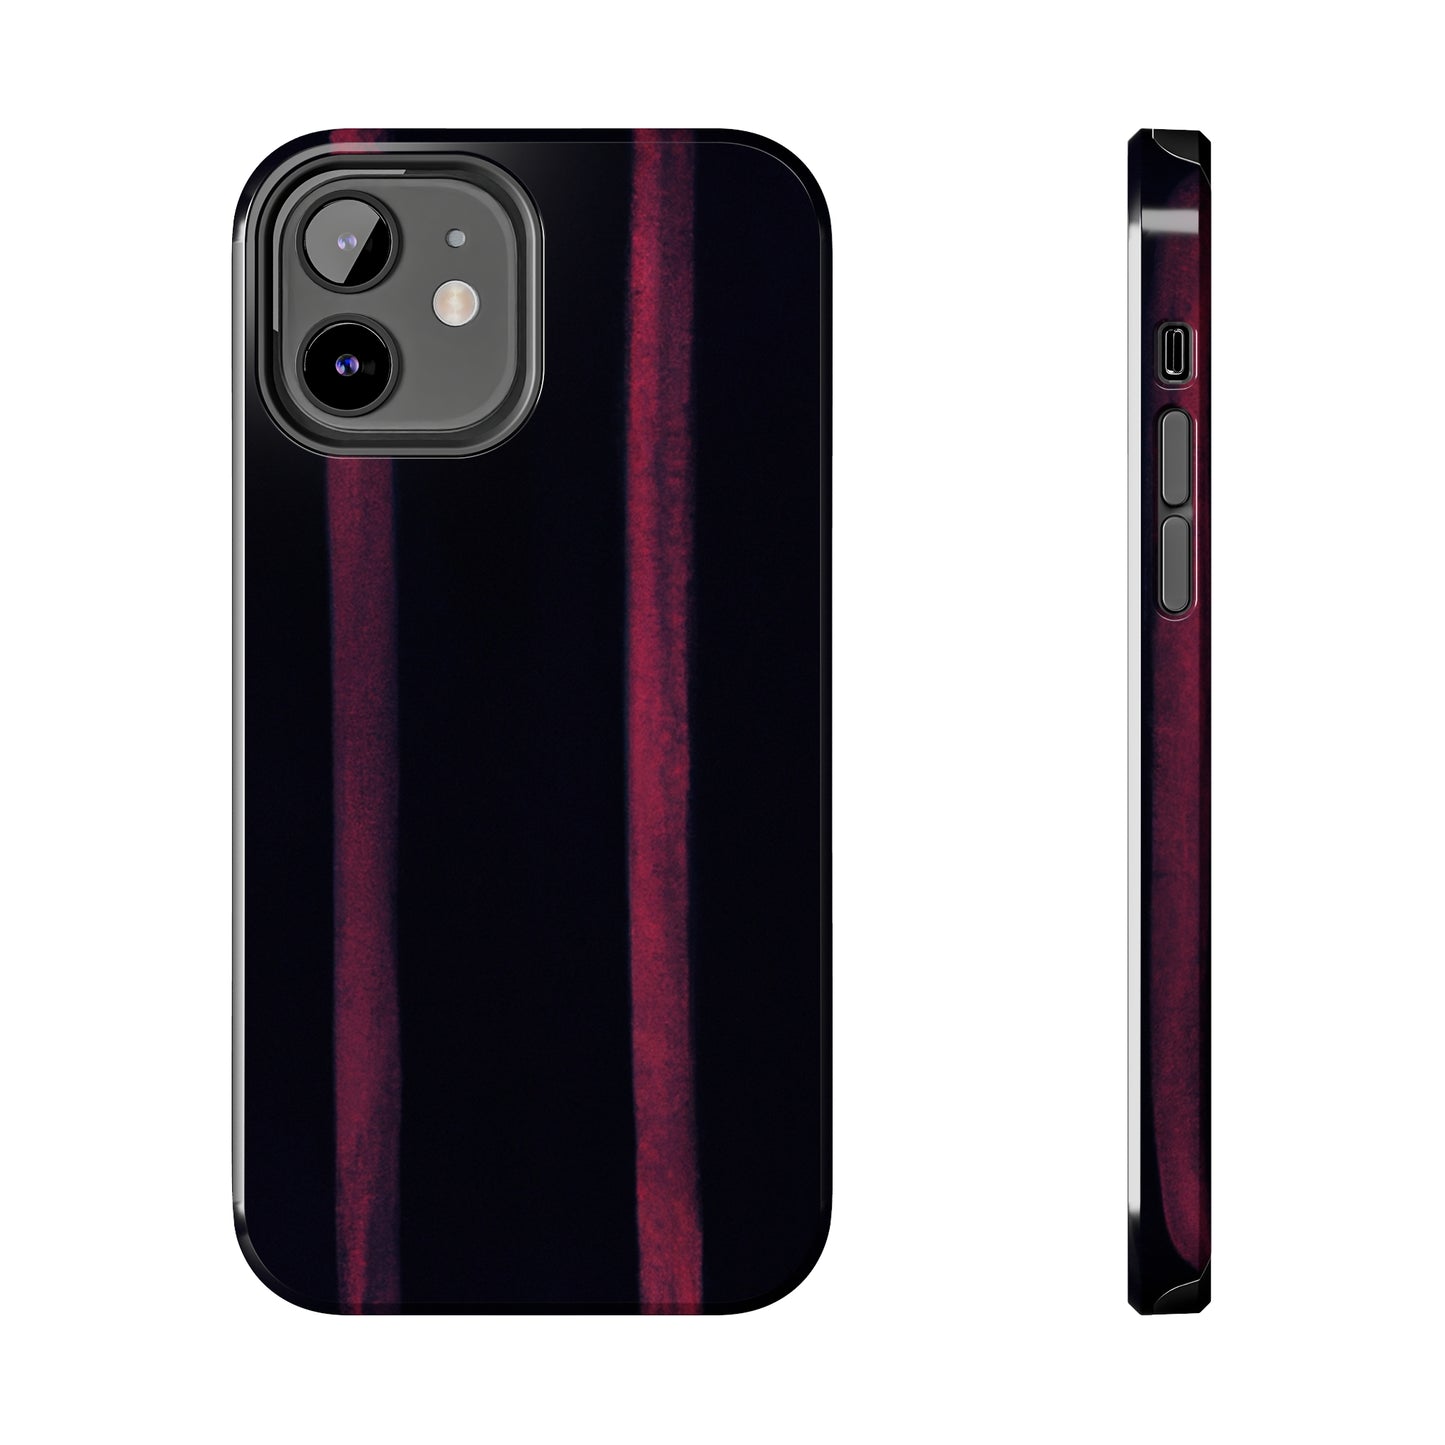 Tough Apple iPhone Cases Ft. Dark Stripes